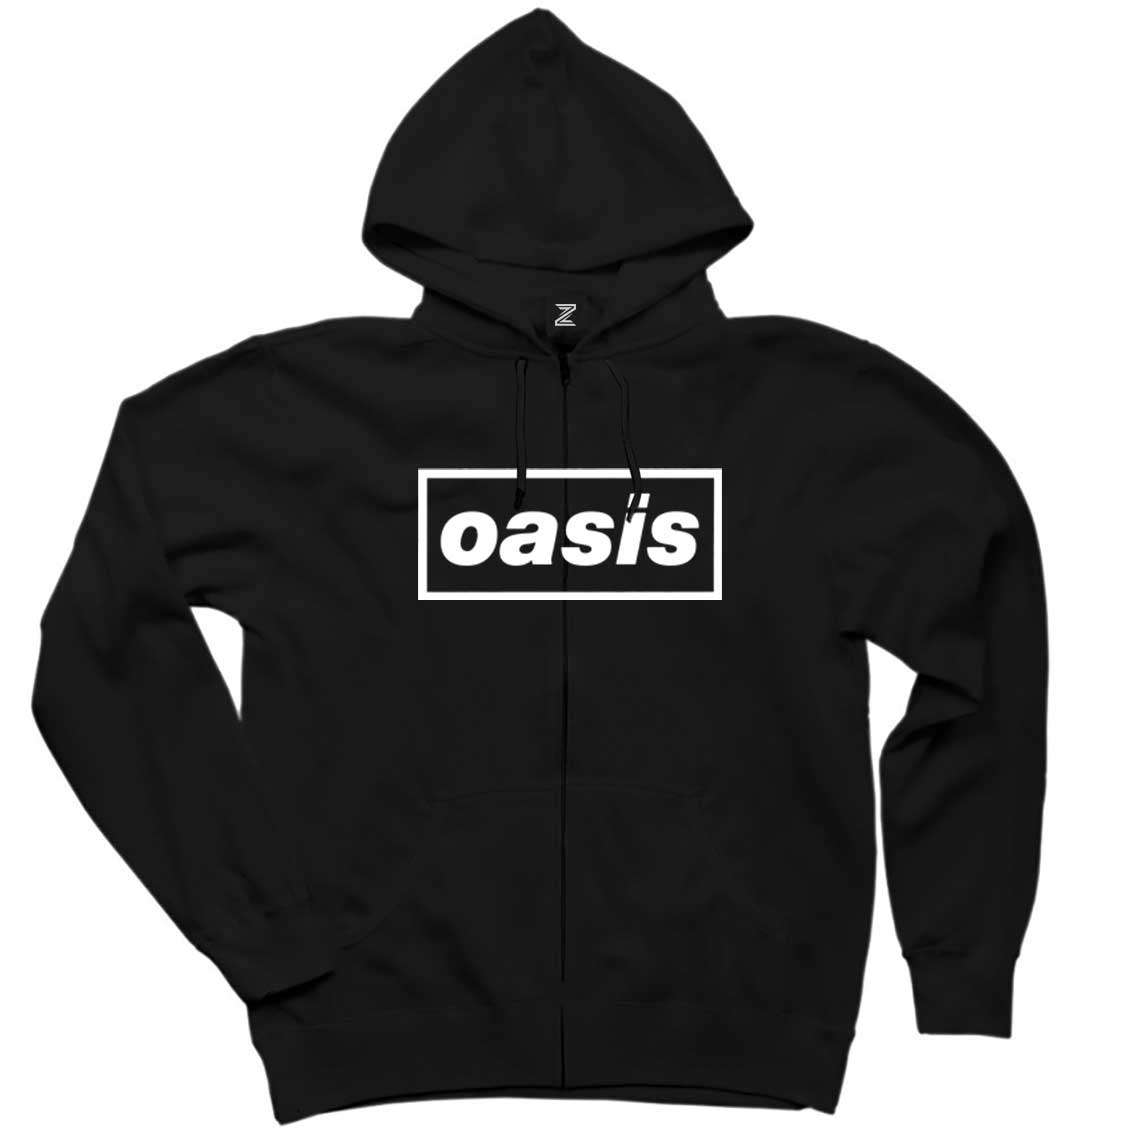 Oasis Text Siyah Fermuarlı Kapşonlu Sweatshirt